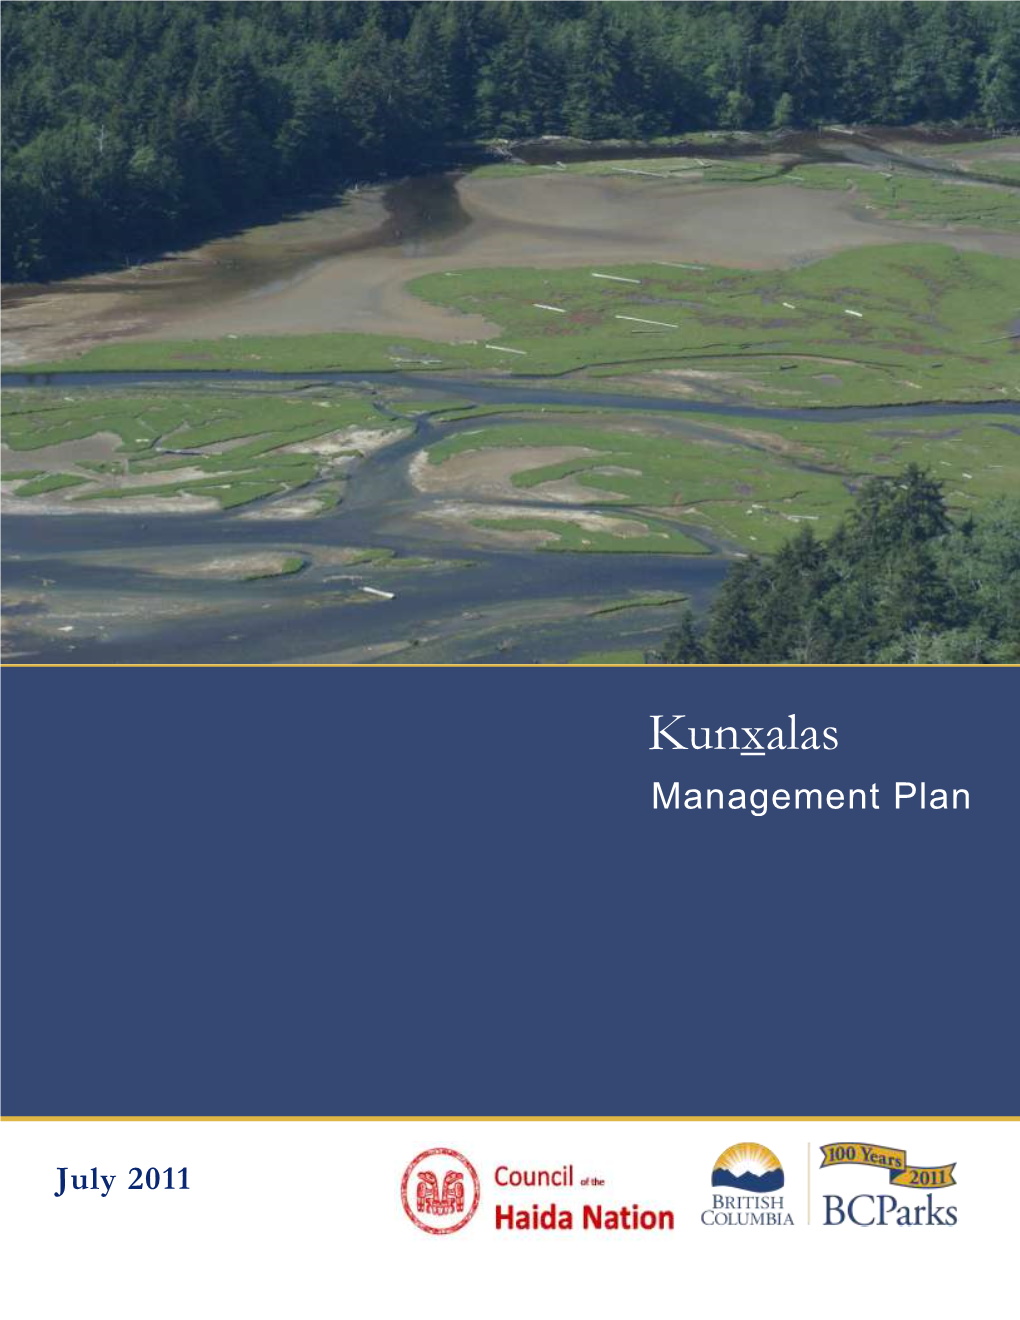 Kunxalas Heritage Site Management Plan